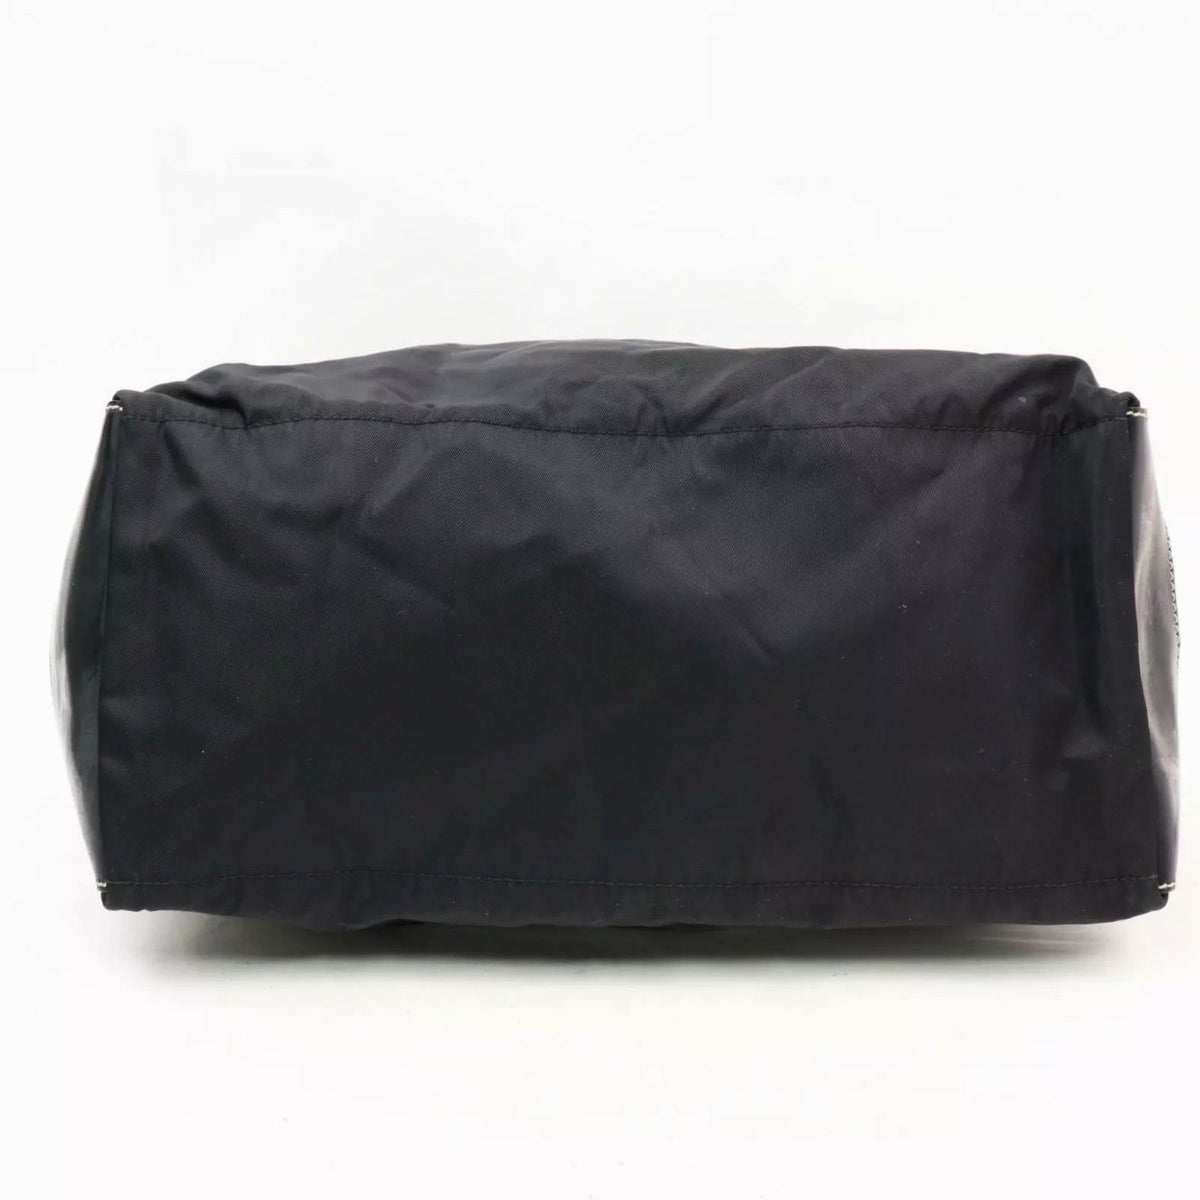 Prada Crossbody Bag Nylon Silver-tone Black/Yellow in Nylon with